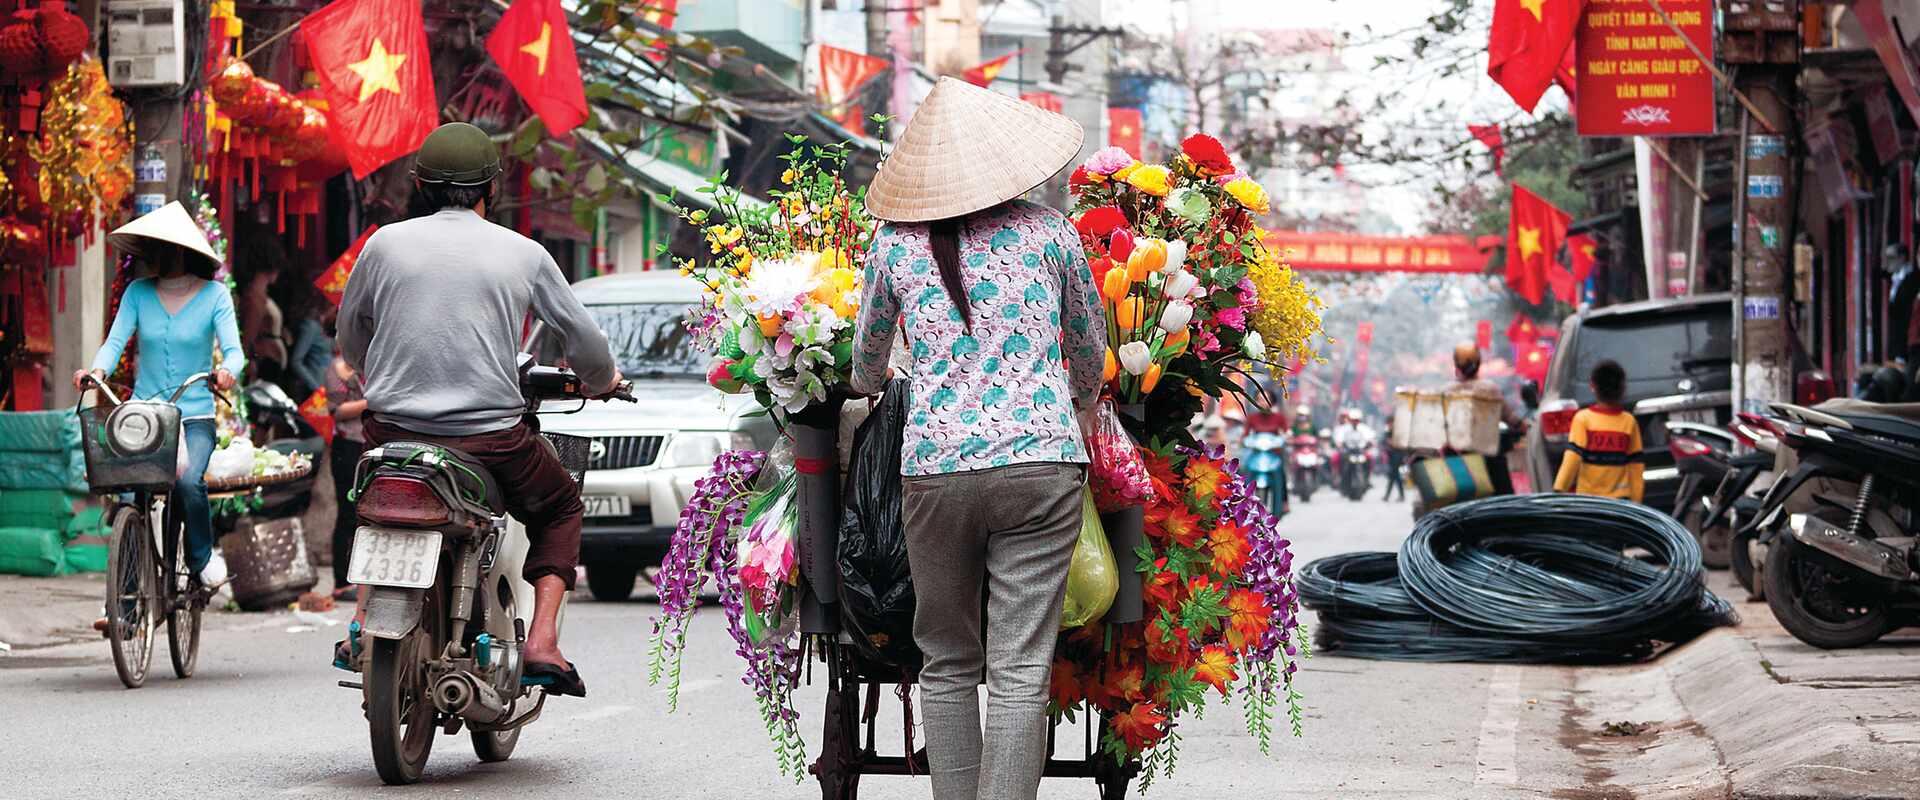 Vietnam Hanoi Street Vendor 